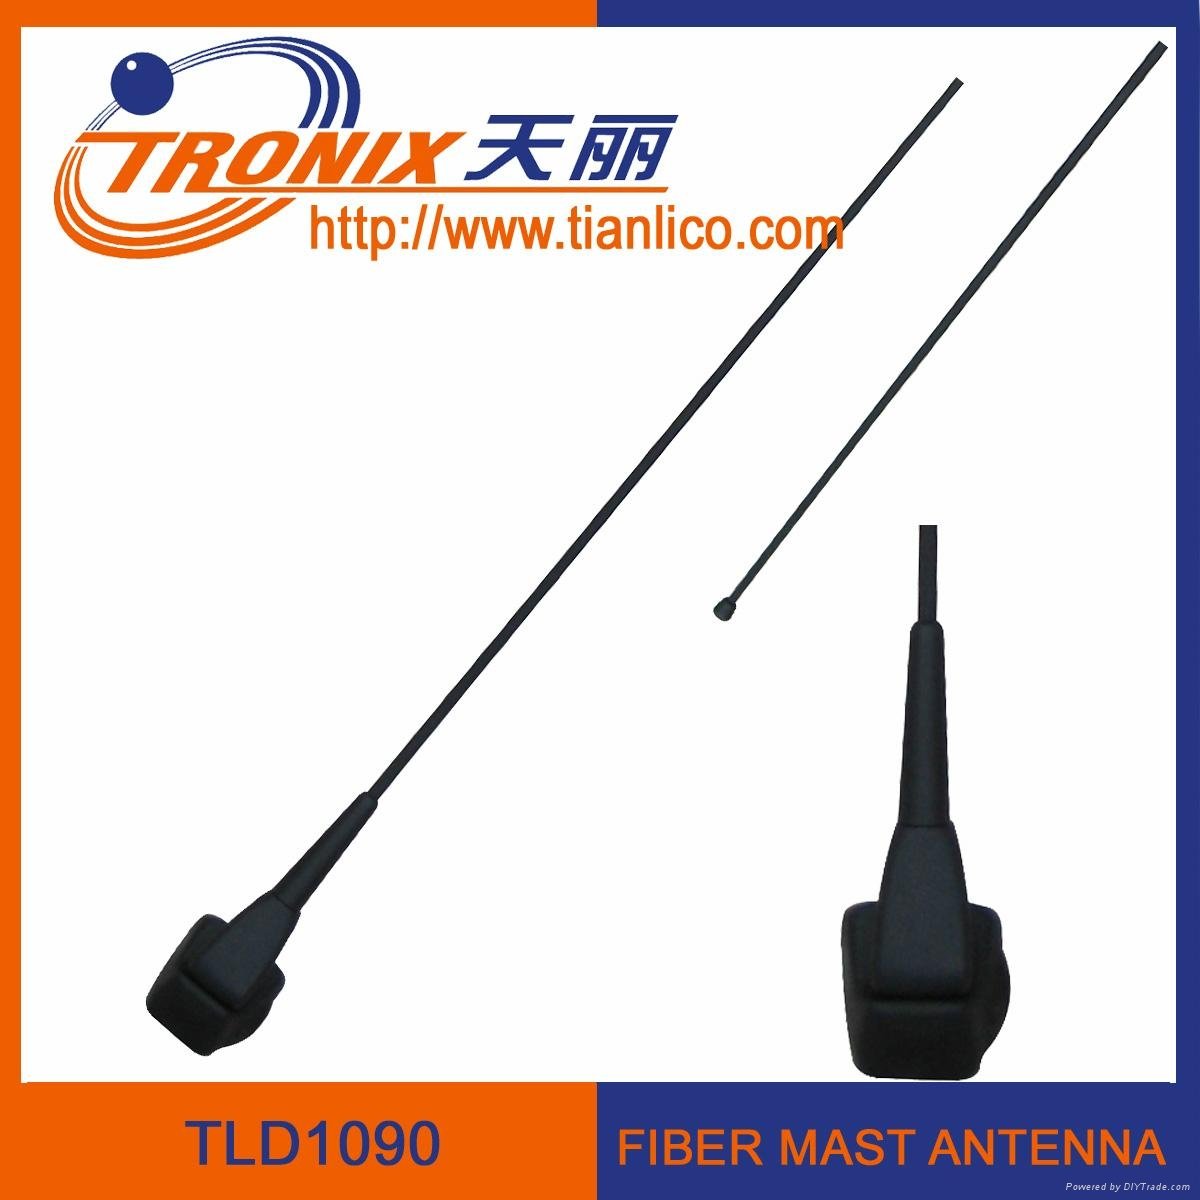 Car fiber mast antenna